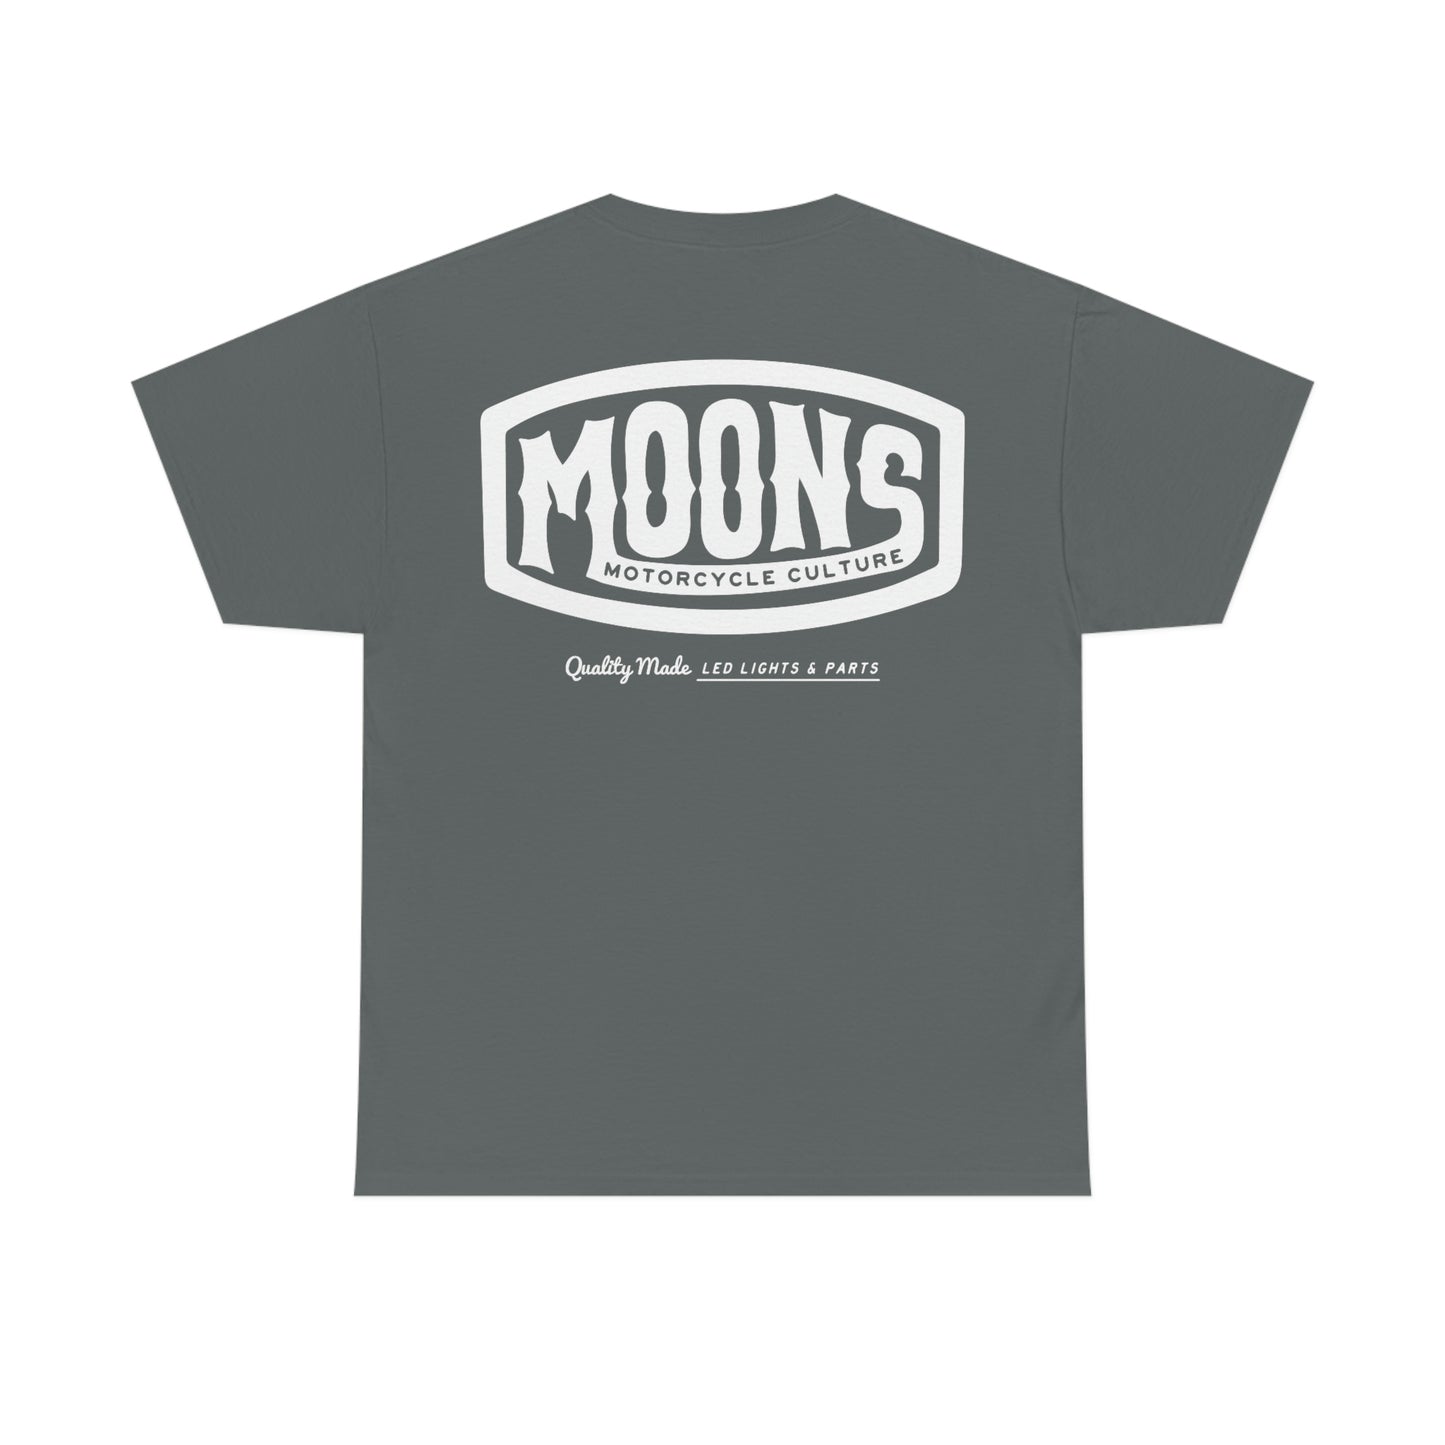 MOONSMC® Vintage Badge White Logo T-Shirt